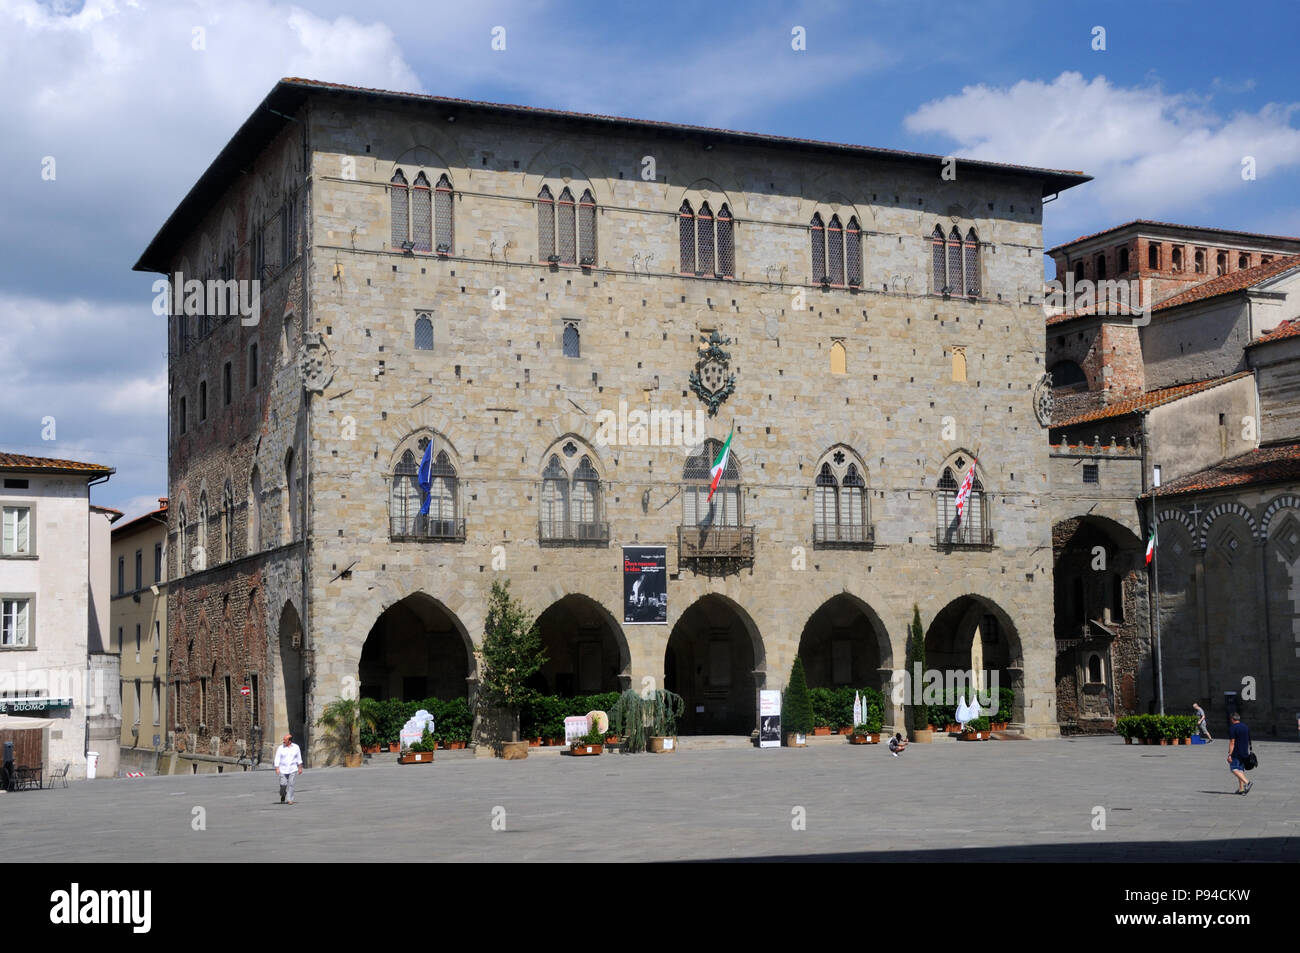 Palazzo del Comune in Pistoia, Tuscany, Italy Stock Photo